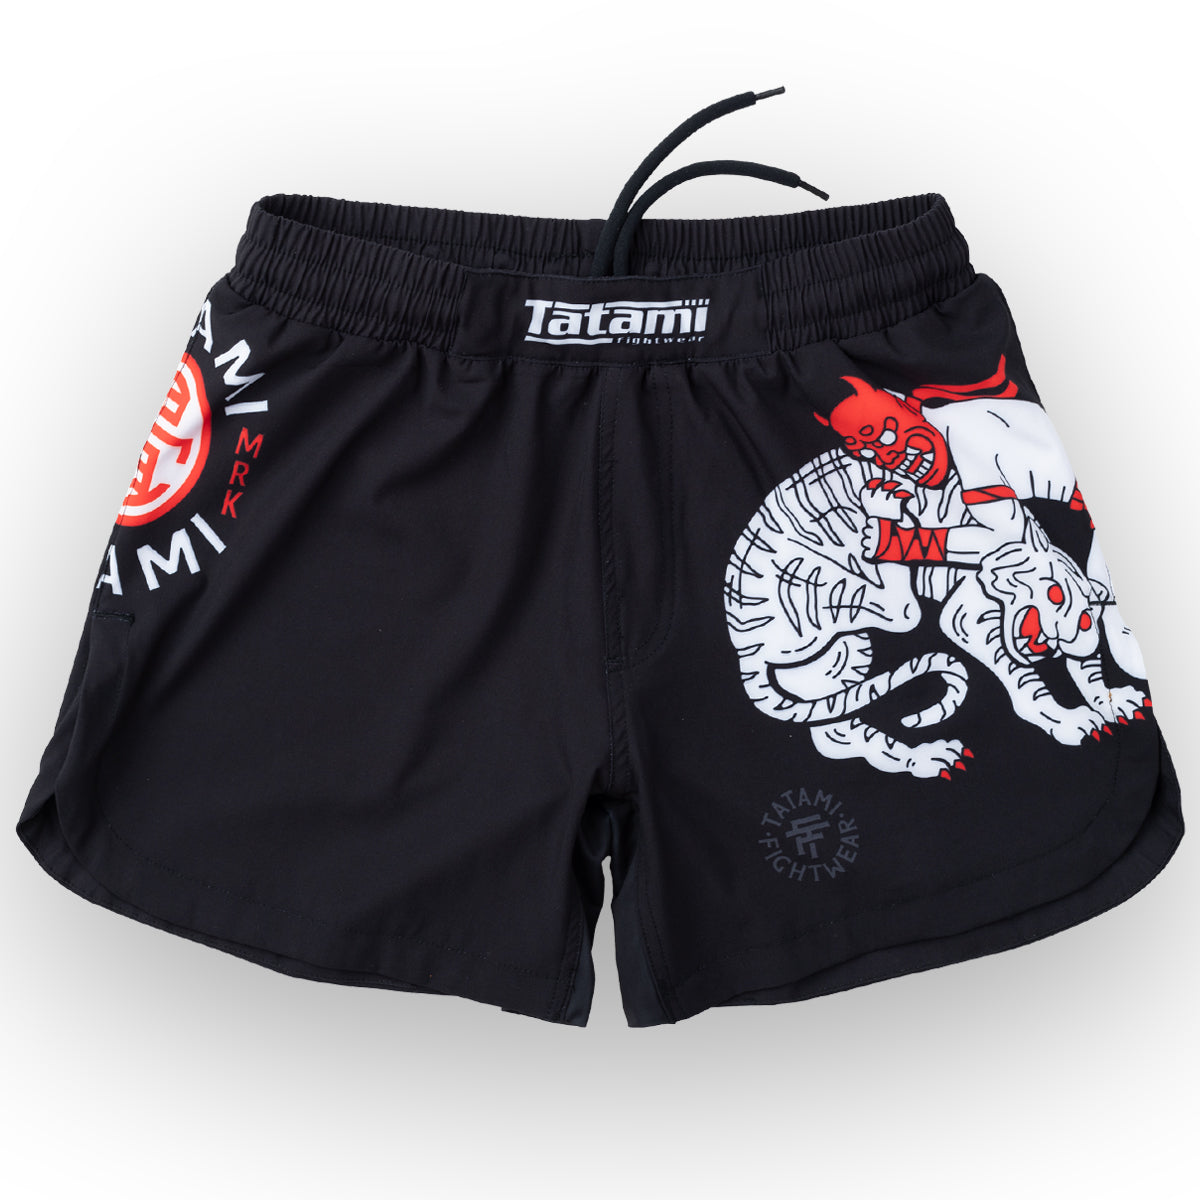 Tatami "Combat Club" Shorts